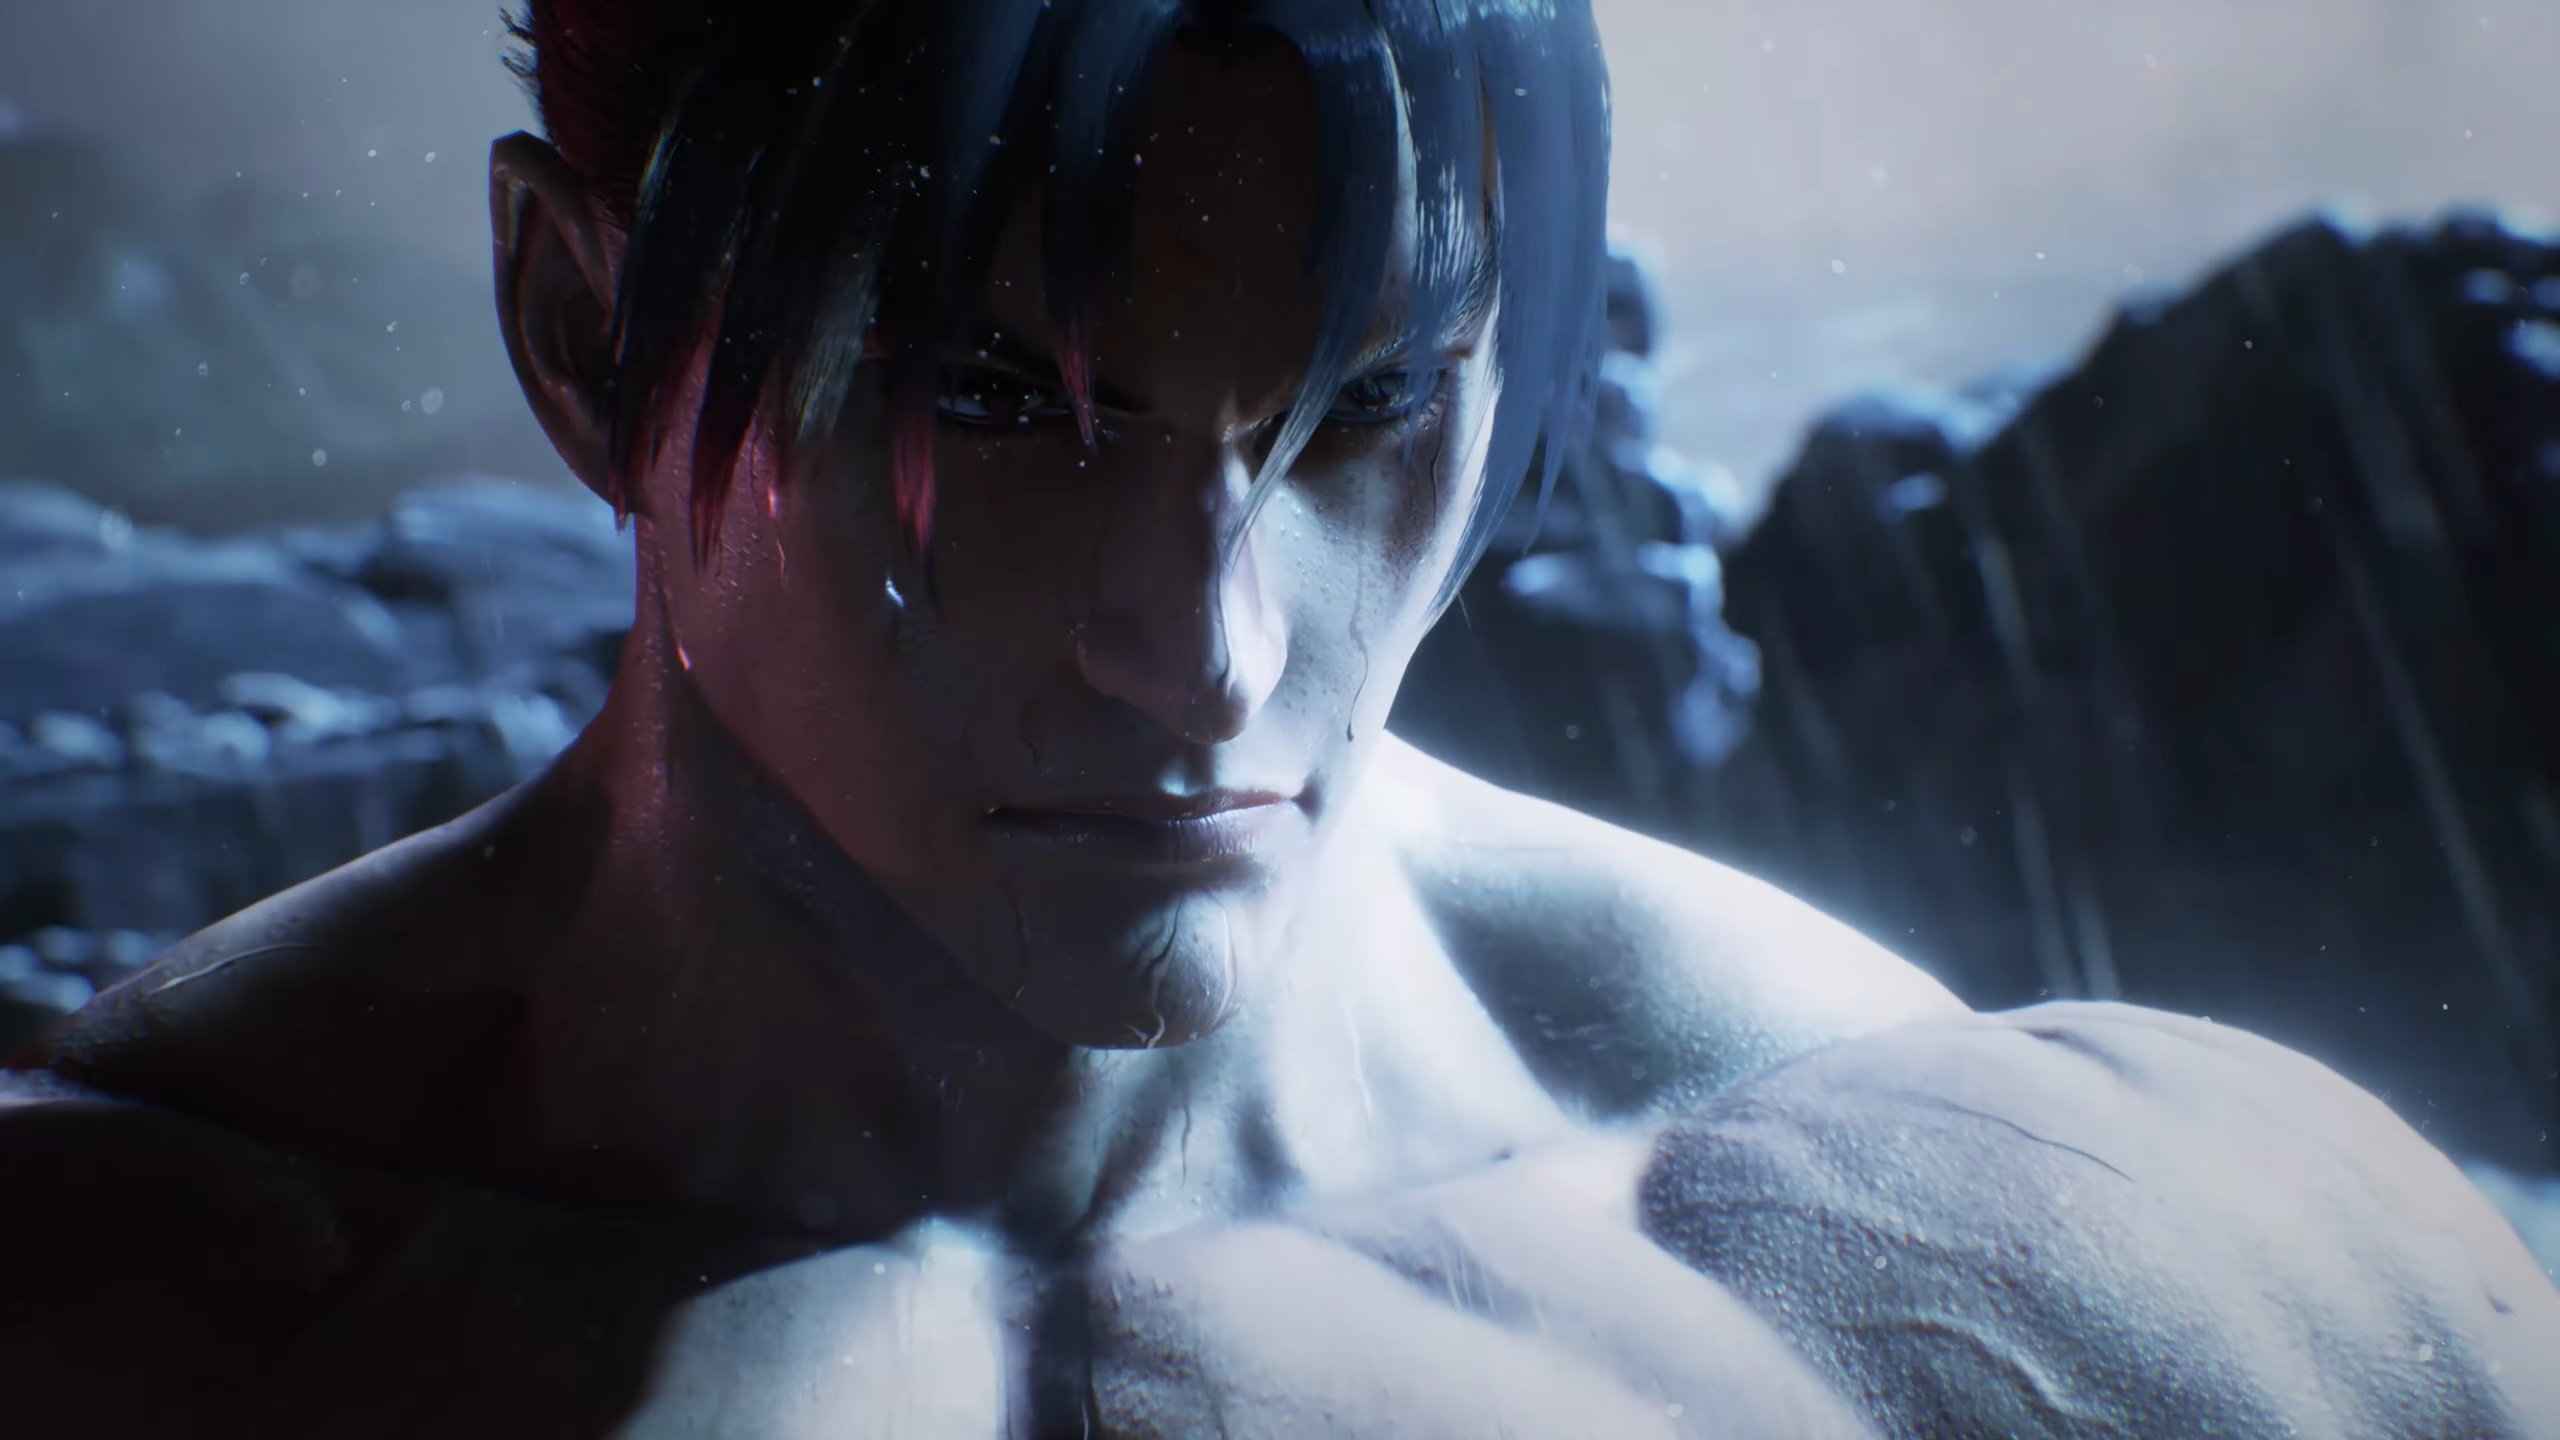 Fighting-Games Daily on X: 📰TEKKEN 8 TRAILERS DETAILS - Trailer is from  the Story Mode - It will focus between Kazuya Mishima and Jin Kazama -  Unlike Tekken 7, the shown footage